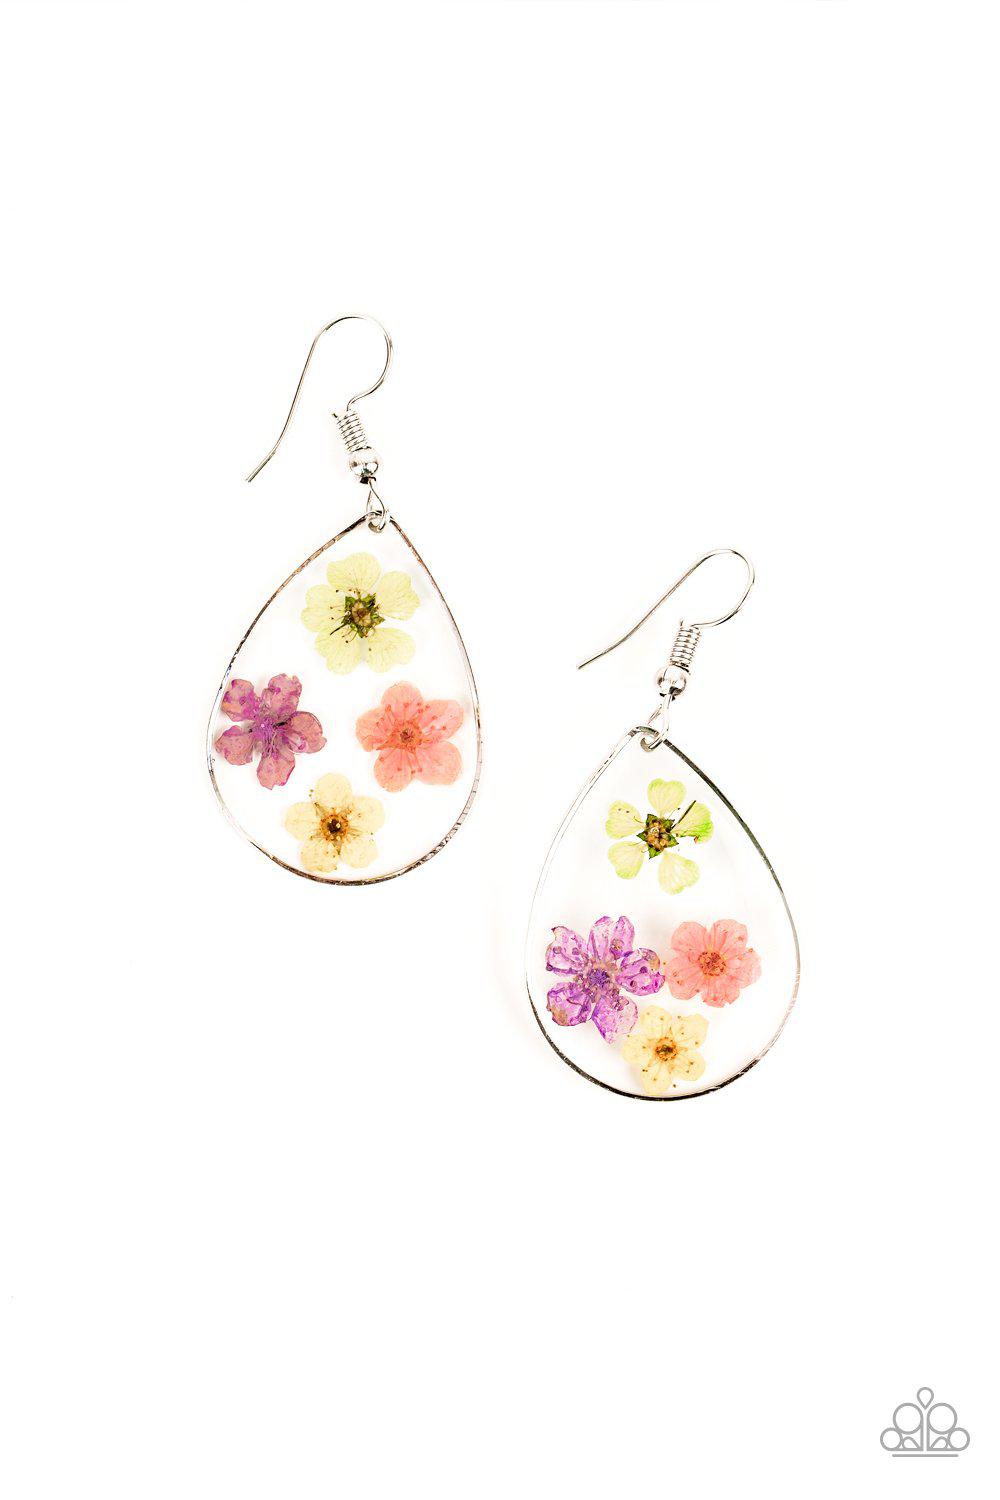 Perennial Prairie Multi Pressed Flower Earrings - Paparazzi Accessories- lightbox - CarasShop.com - $5 Jewelry by Cara Jewels